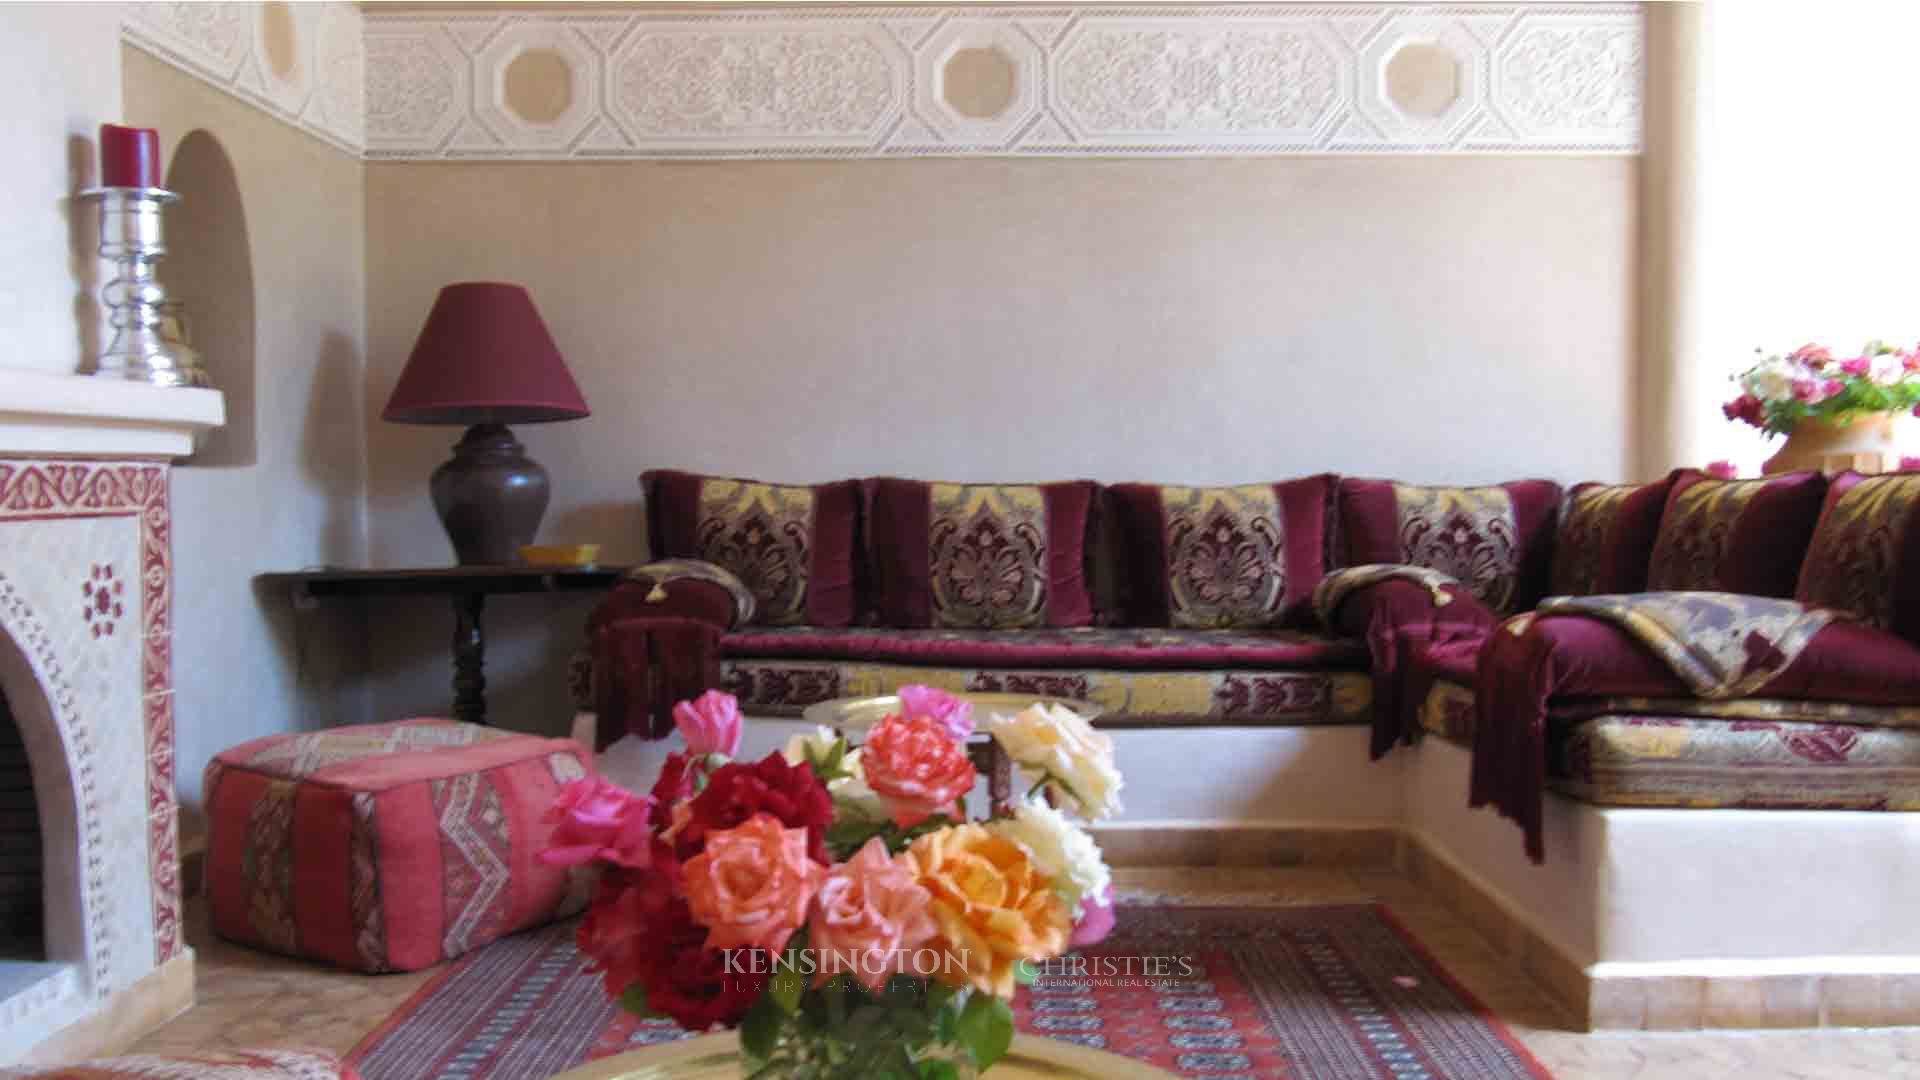 Villa Nachi in Marrakech, Morocco